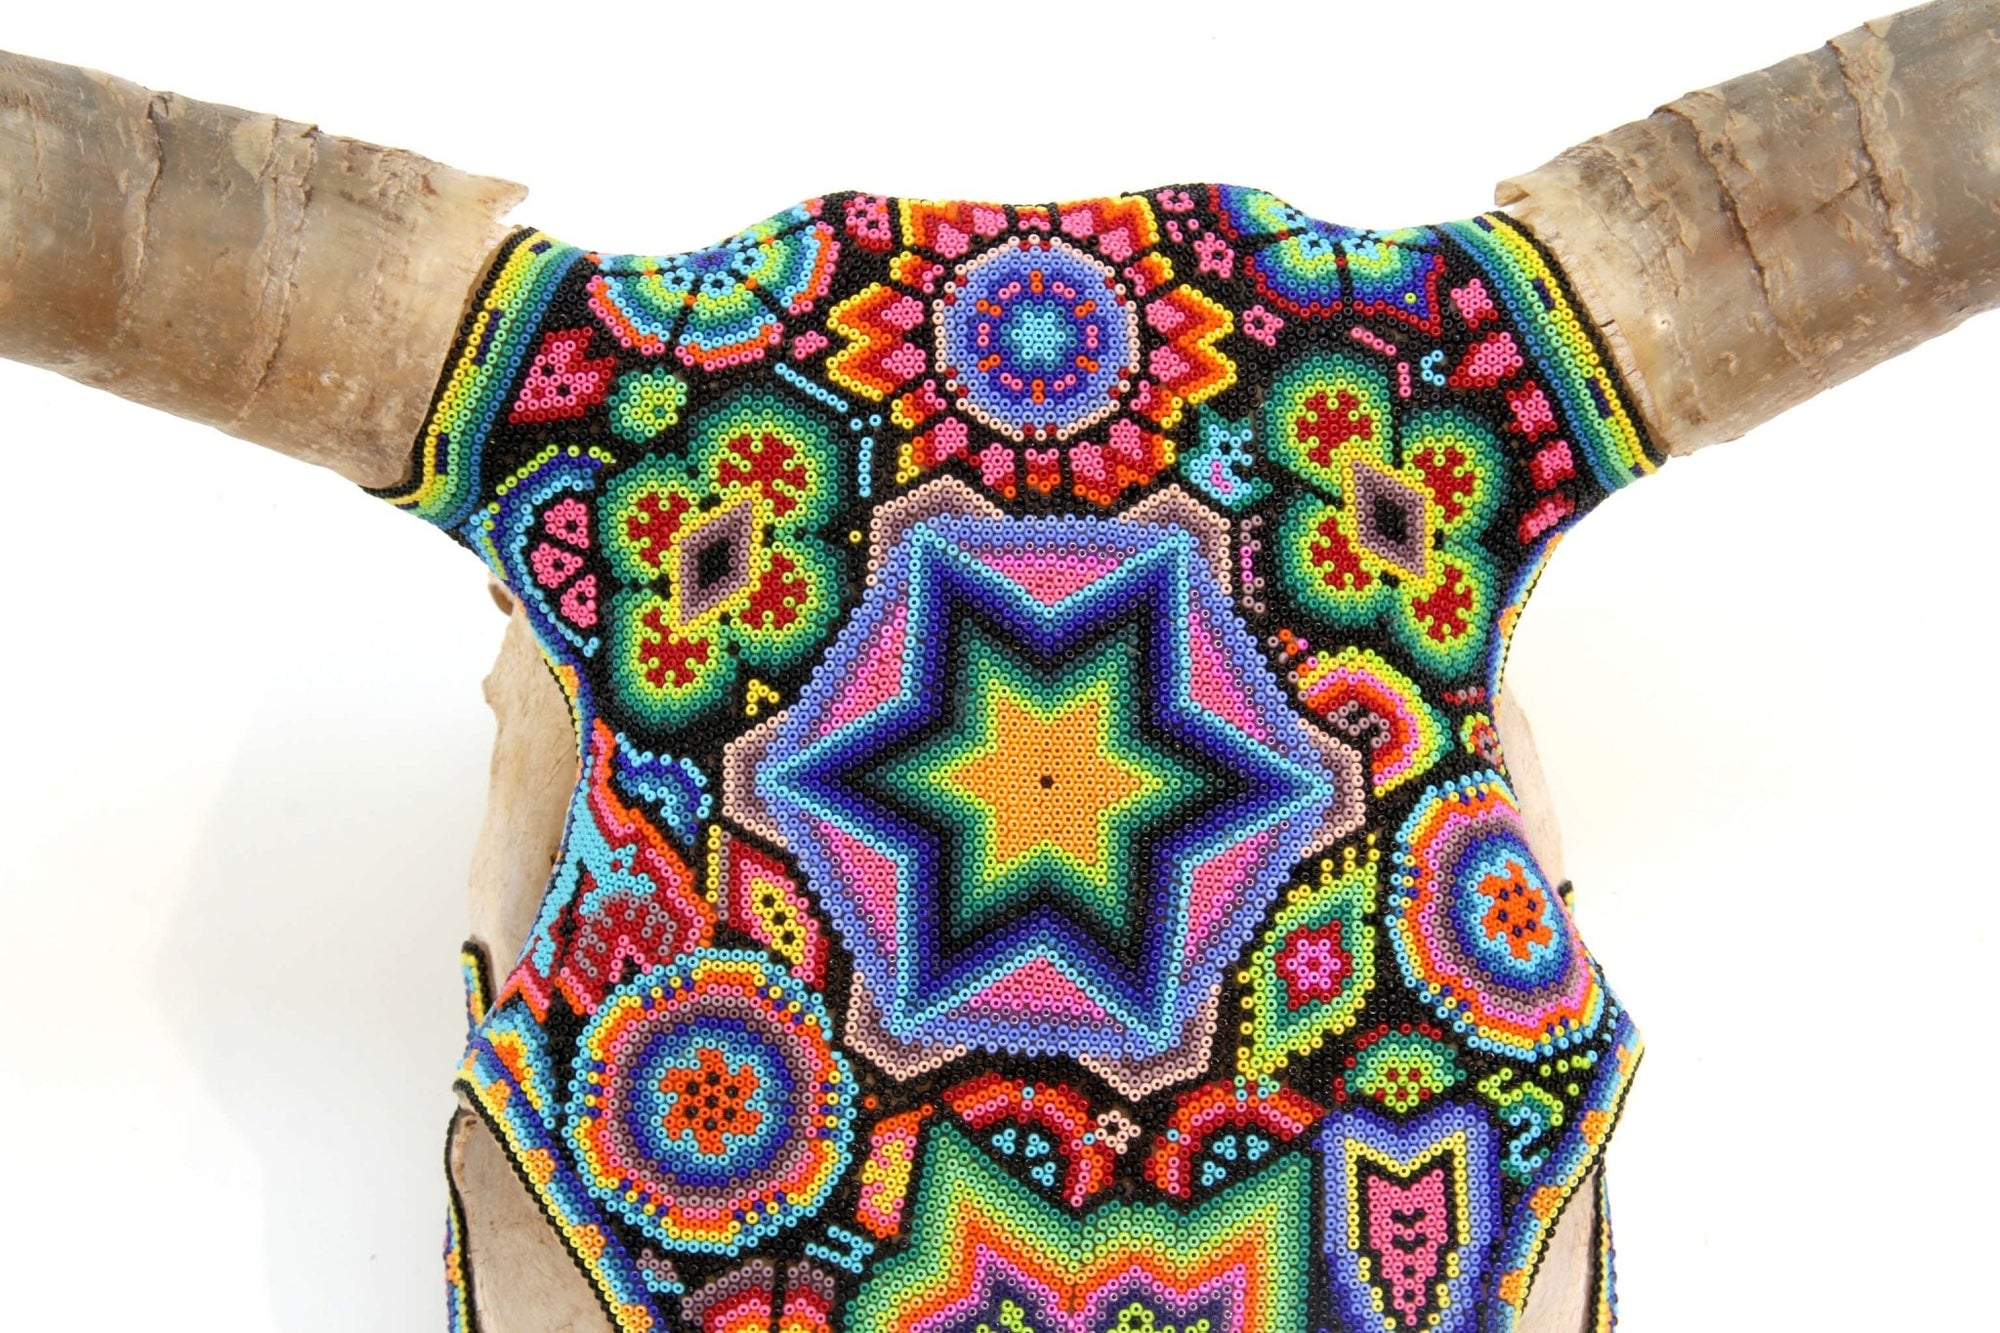 Crâne de vache Art Huichol - Xurawe temai - Art Huichol - Marakame